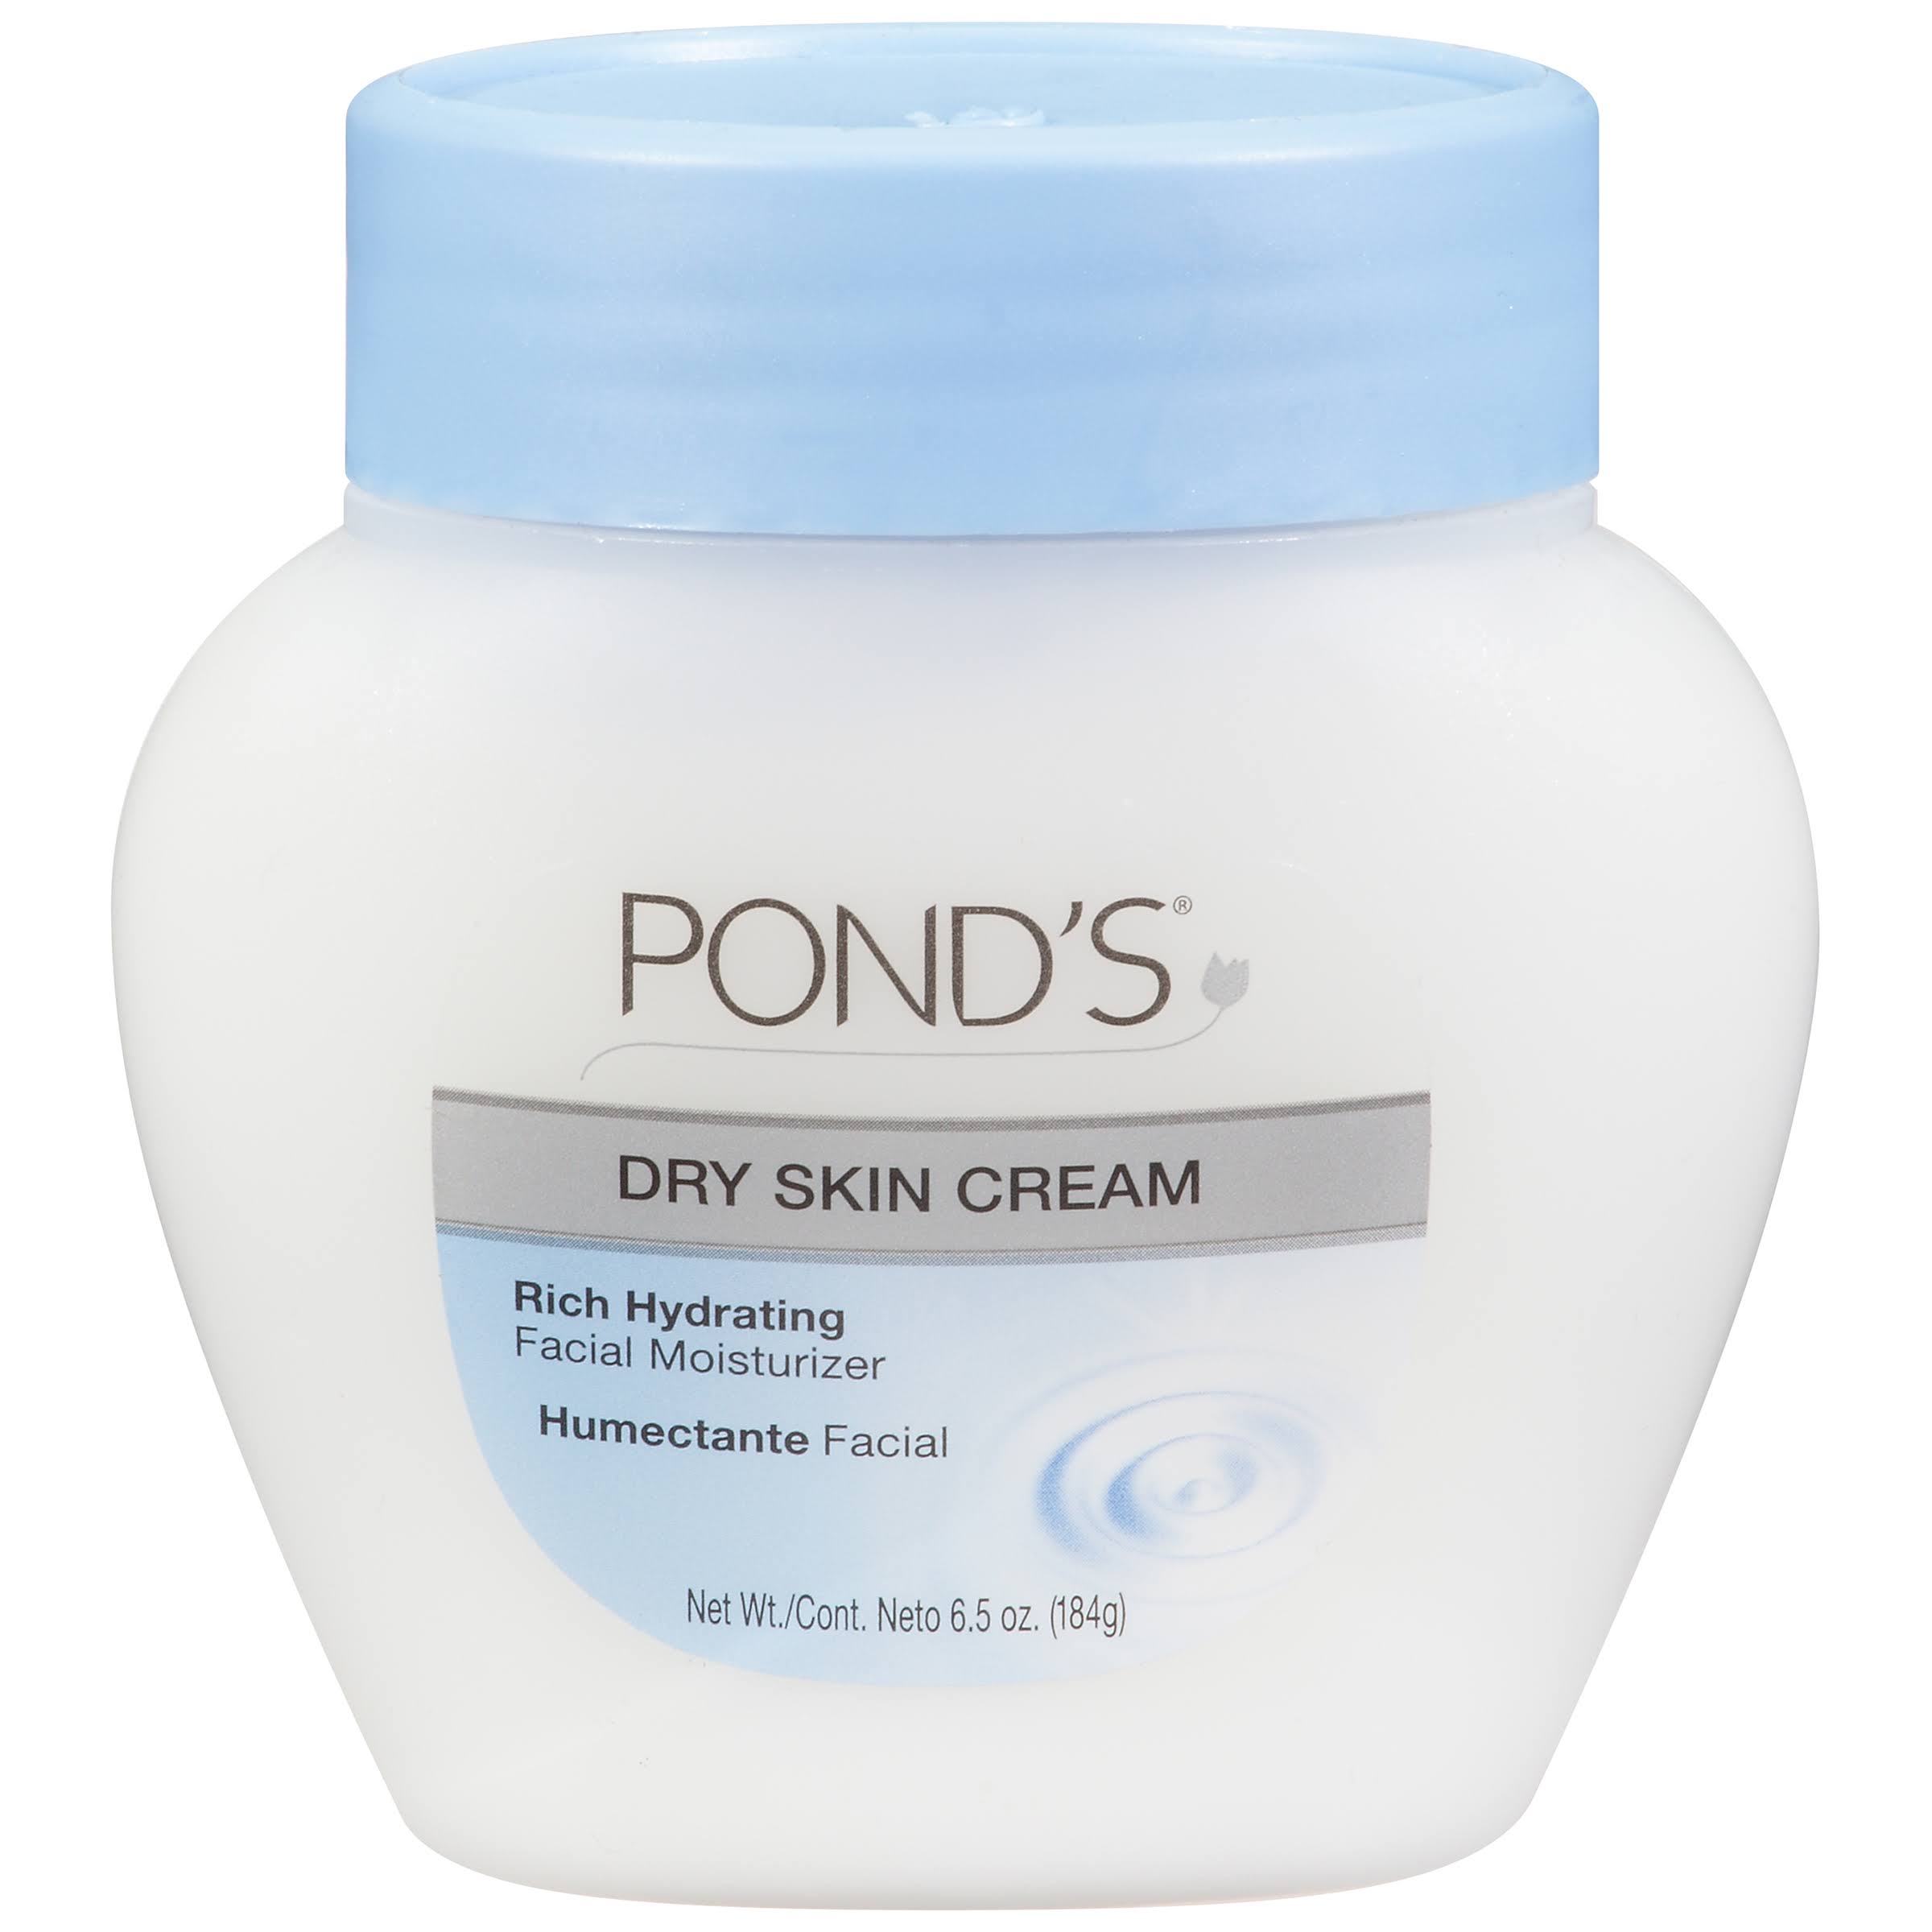 Pond's Dry Skin Cream - 6.5oz